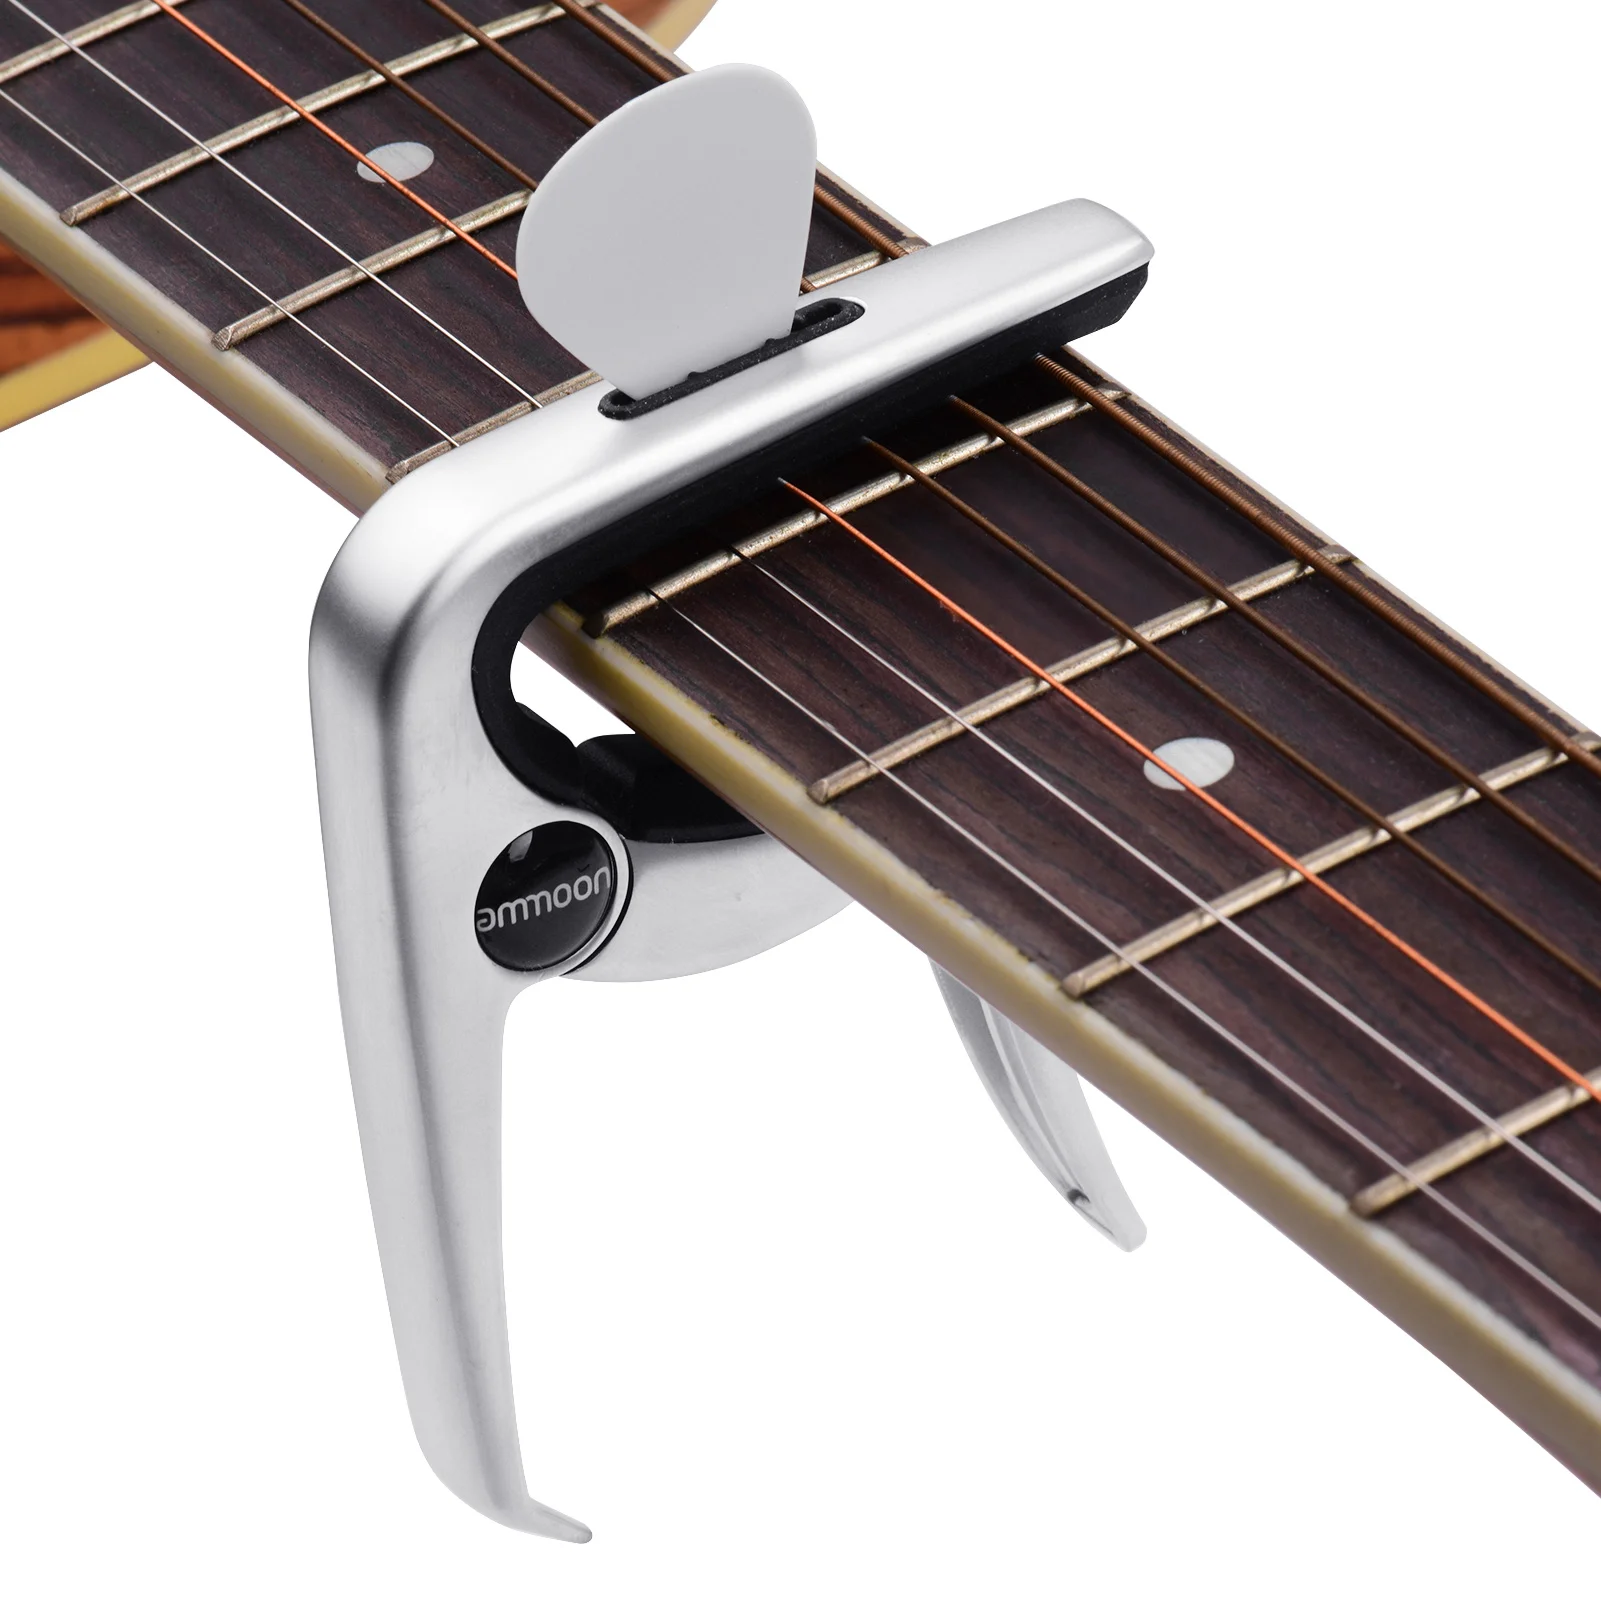  Silver ammoon Guitar Capo Multifunctional with Bridge Pin Puller Guitar Pick Slot 3pcs Guitar Picks for Acoustic Electric Guitars Bass 